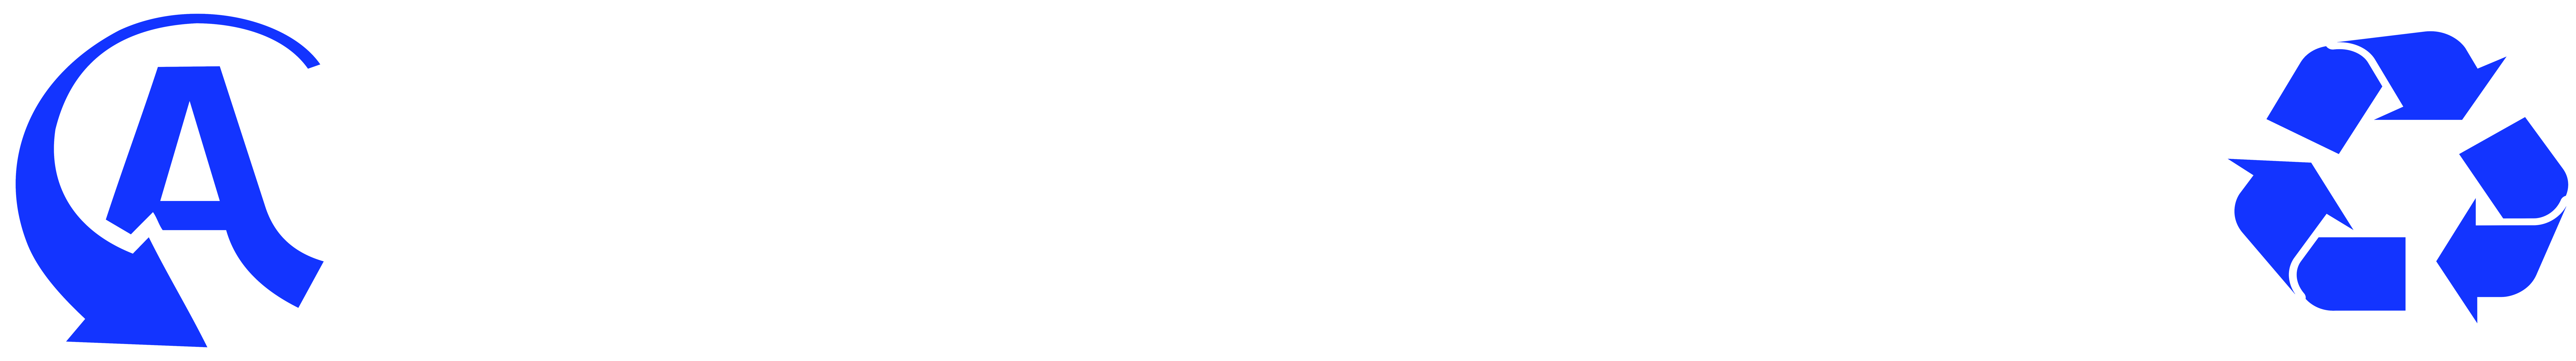 AXILLEAS SCRAP logo transparent | ΑΧΙΛΛΕΑΣ SCRAP